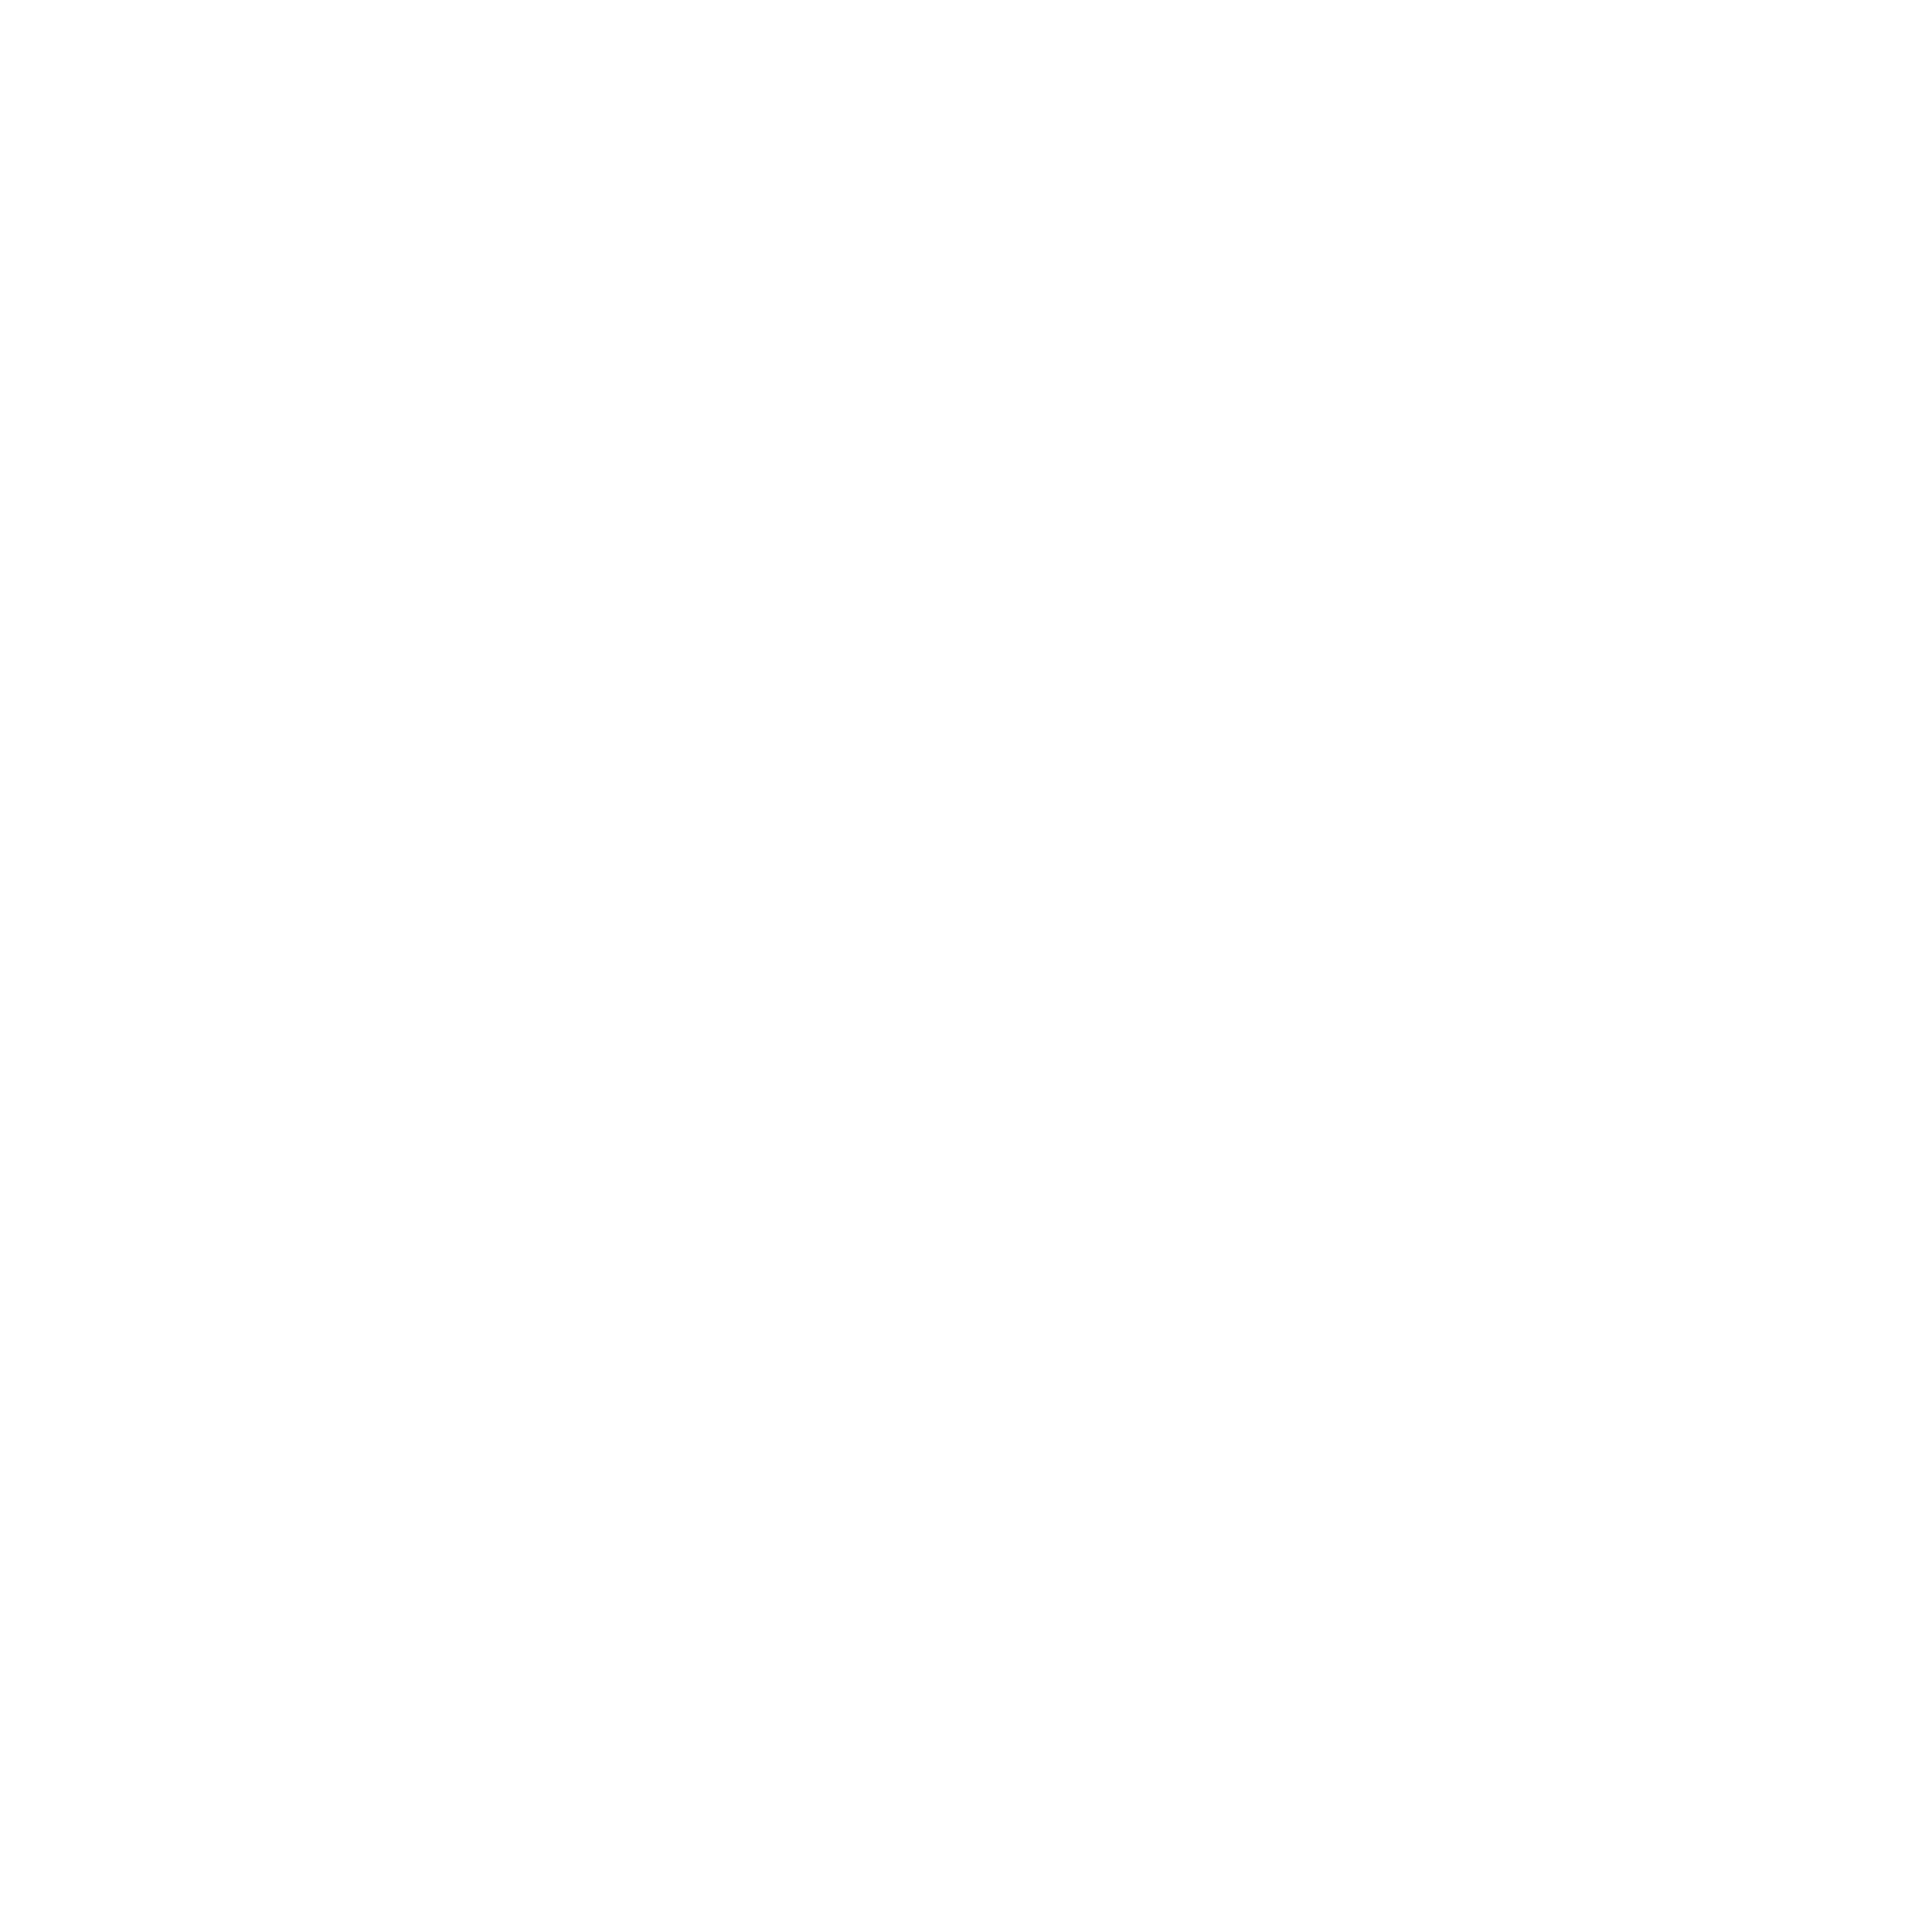 Piney Woods Elementary